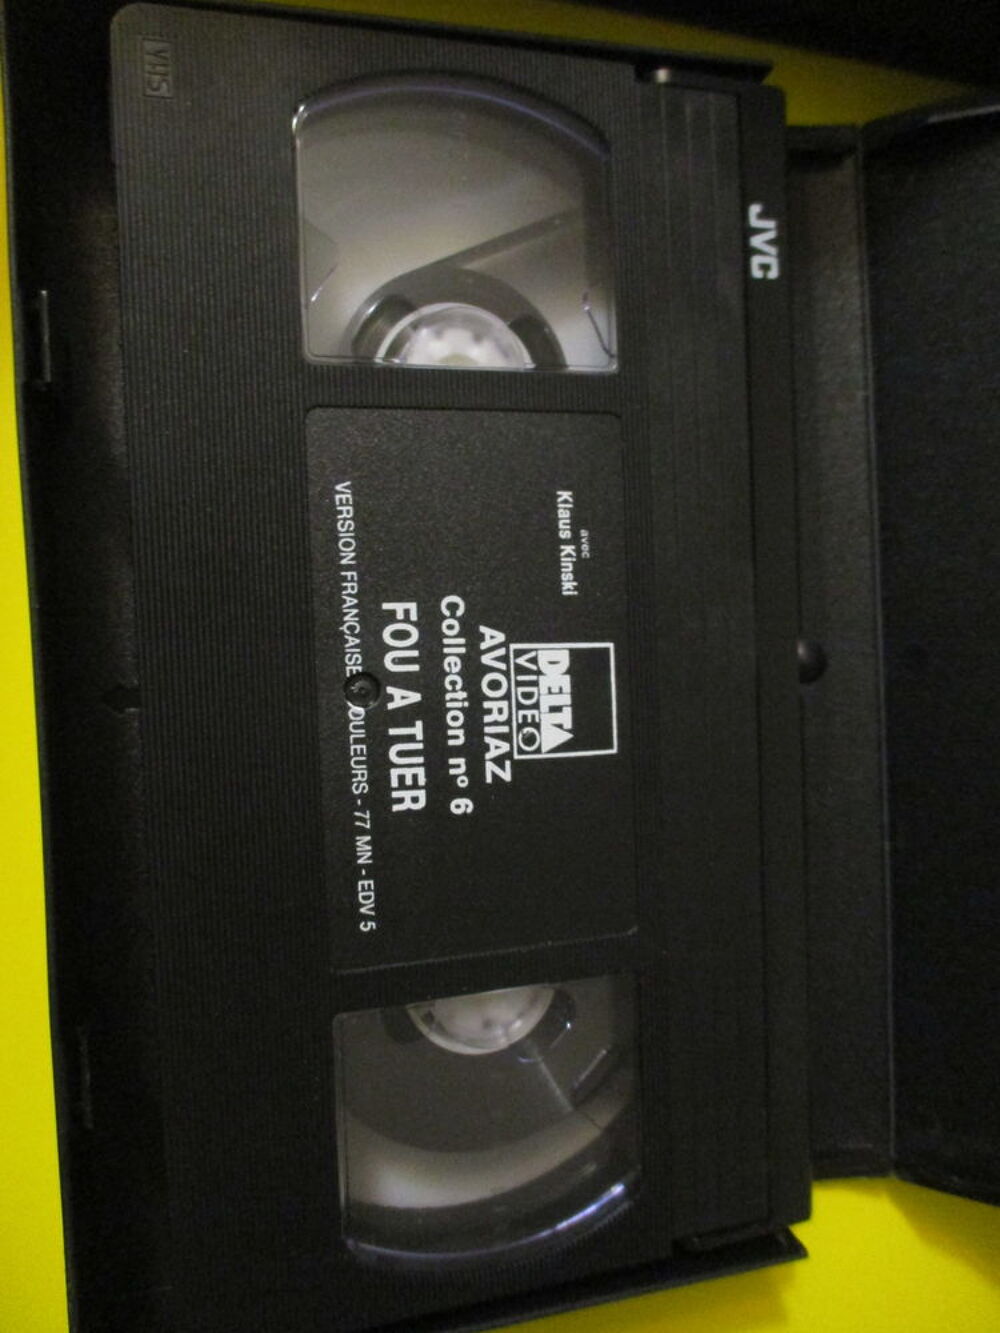 FFOU A TUER VHS KLAUS KINSKI NIGTCRAWLER HORREUR DVD et blu-ray